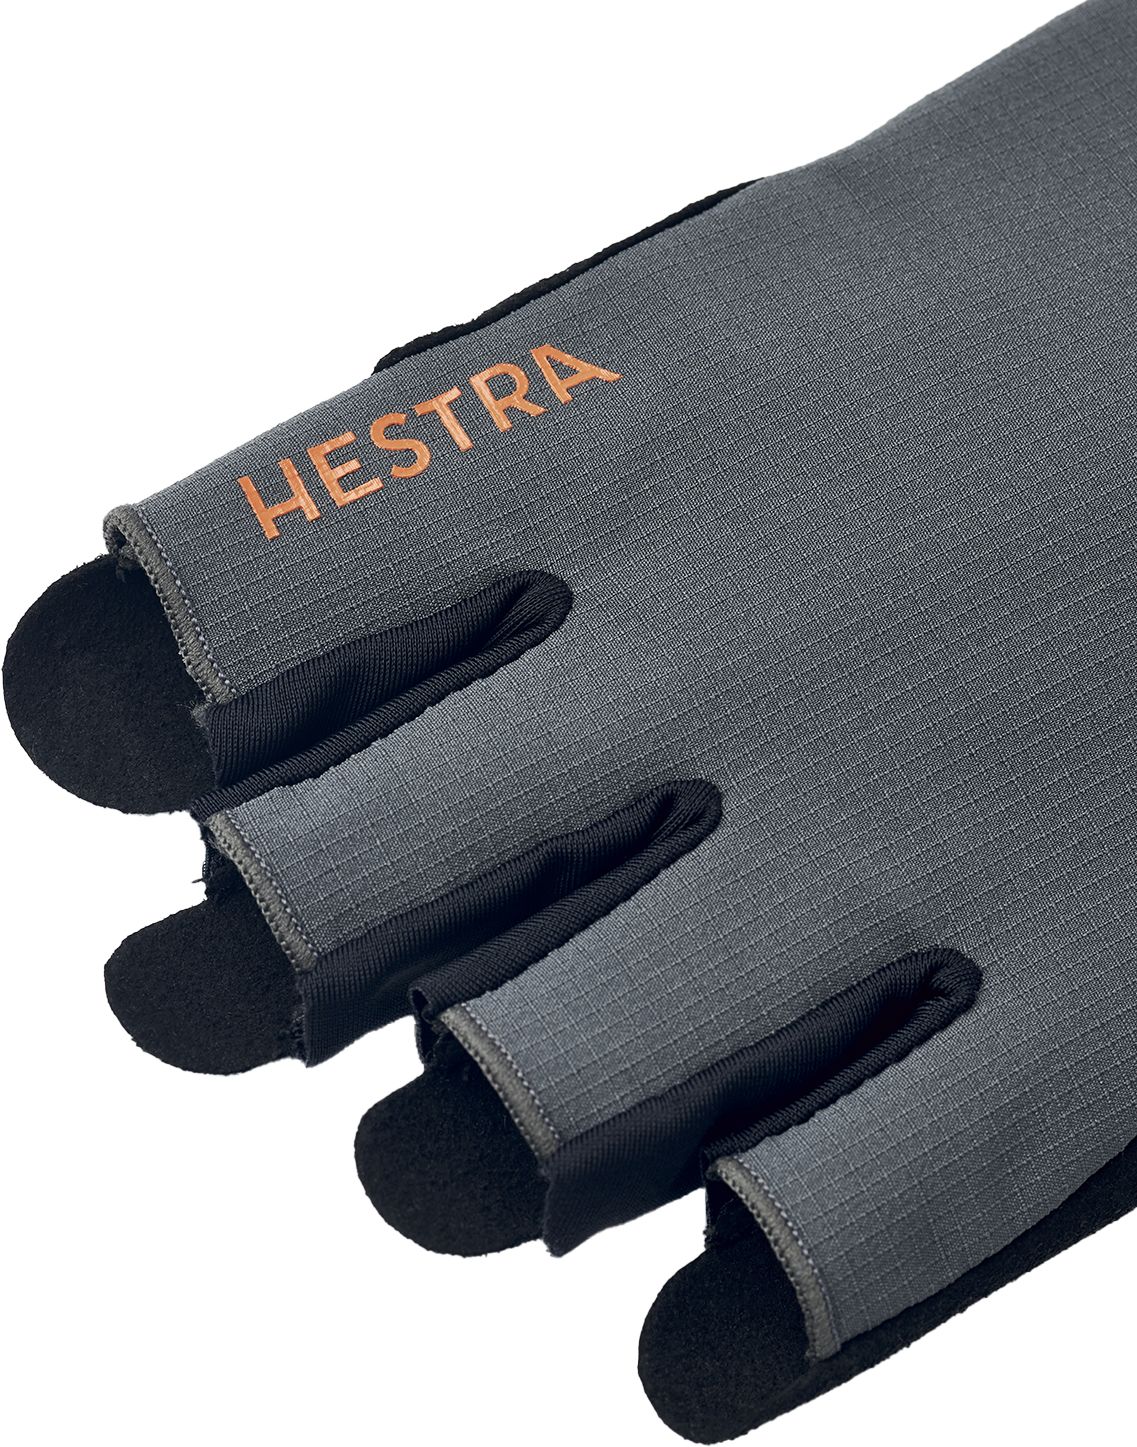 HESTRA, Bike Guard Short - 5 finger